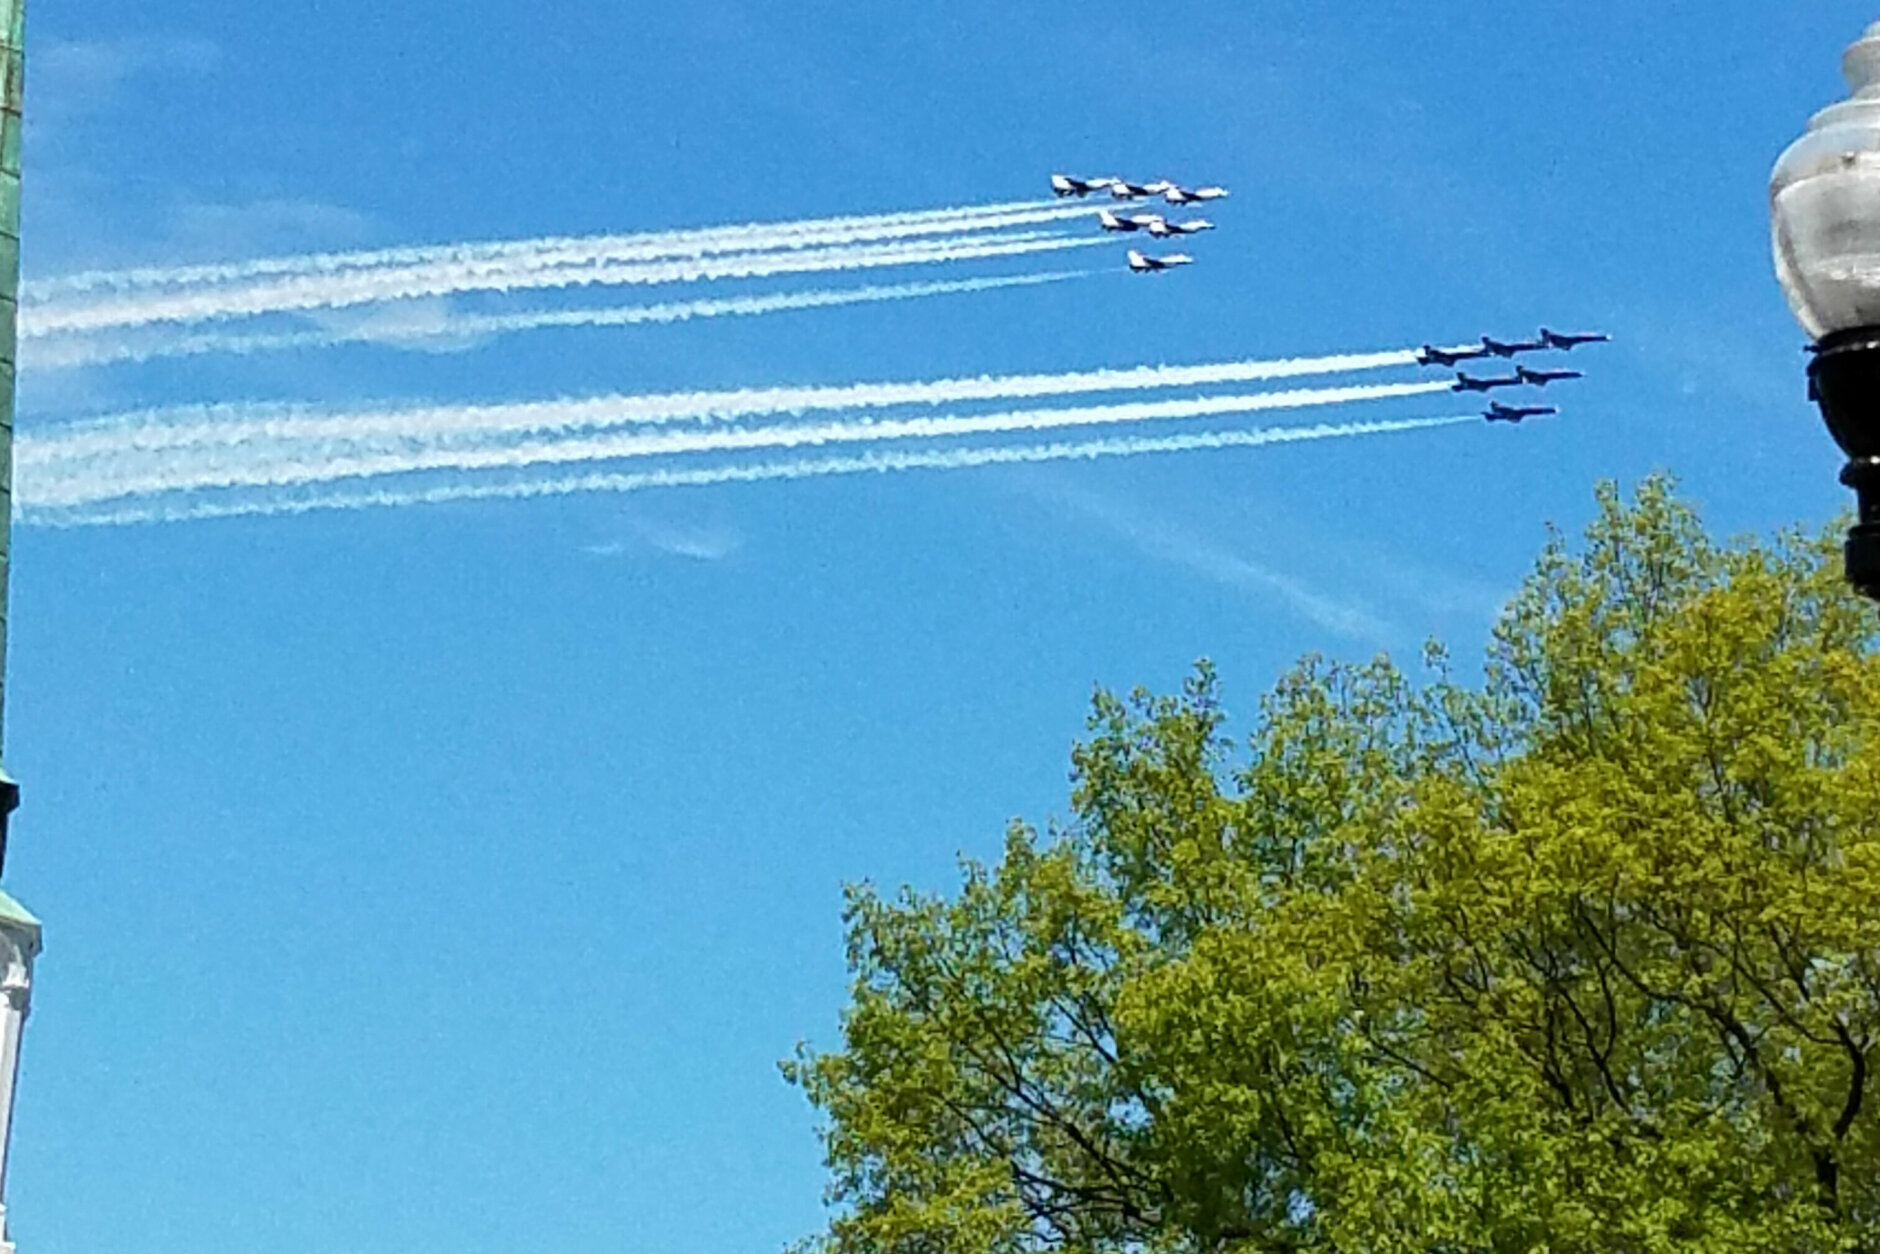 Military jets in the skies above Arlington, Va.